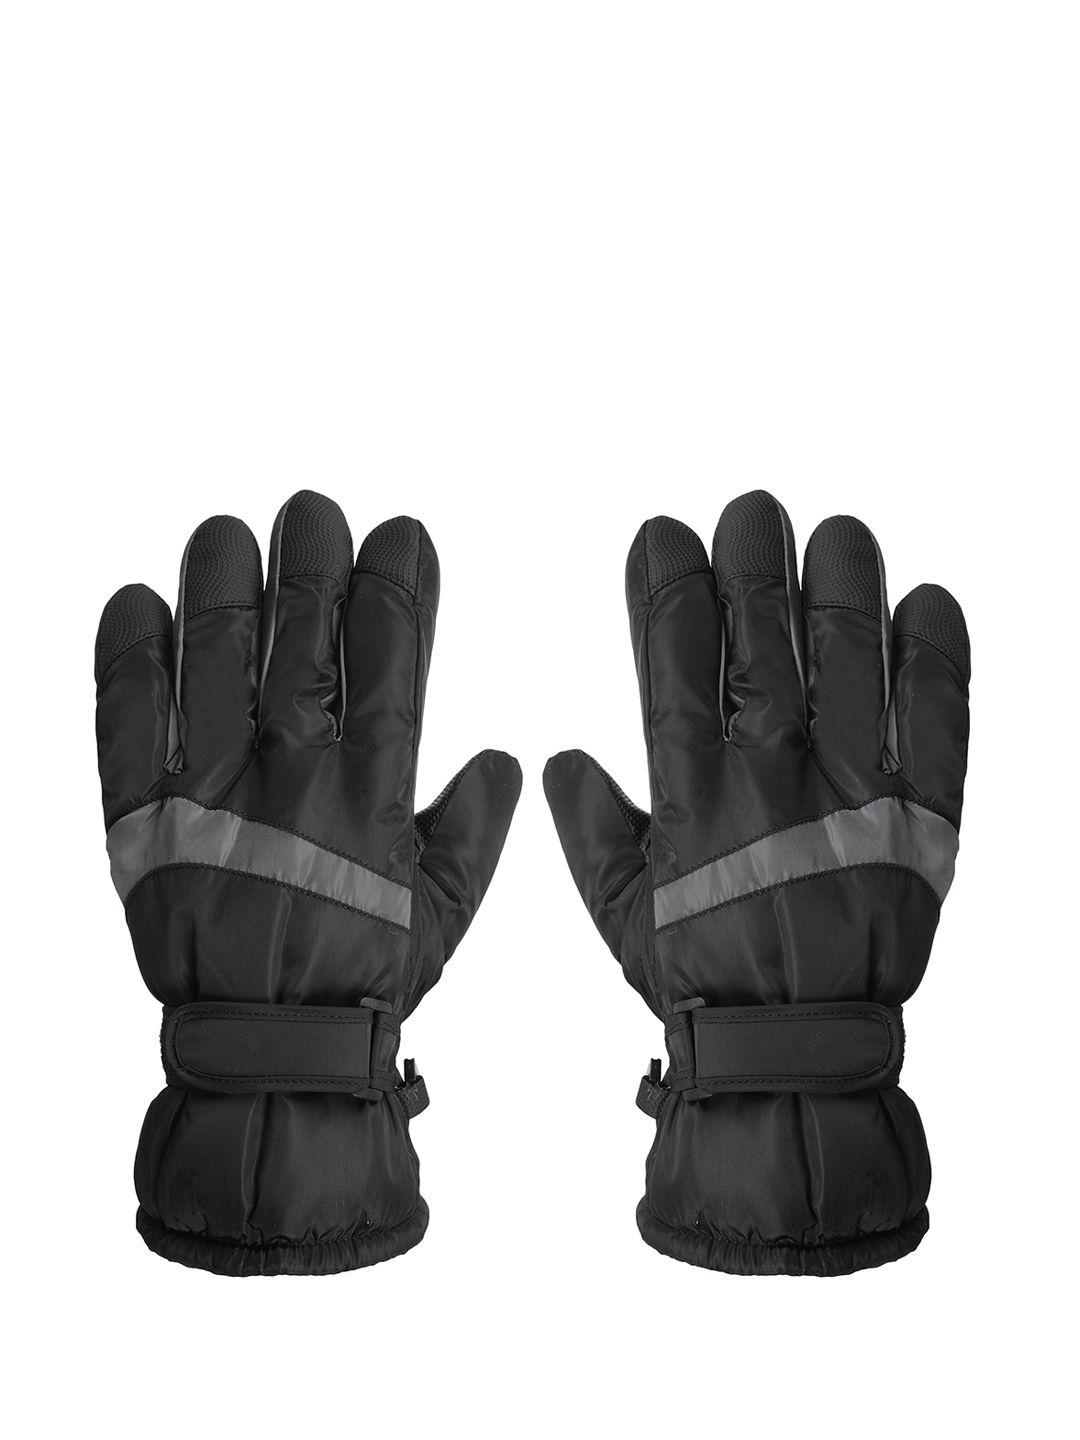 fabseasons water resistant windproof sports gloves